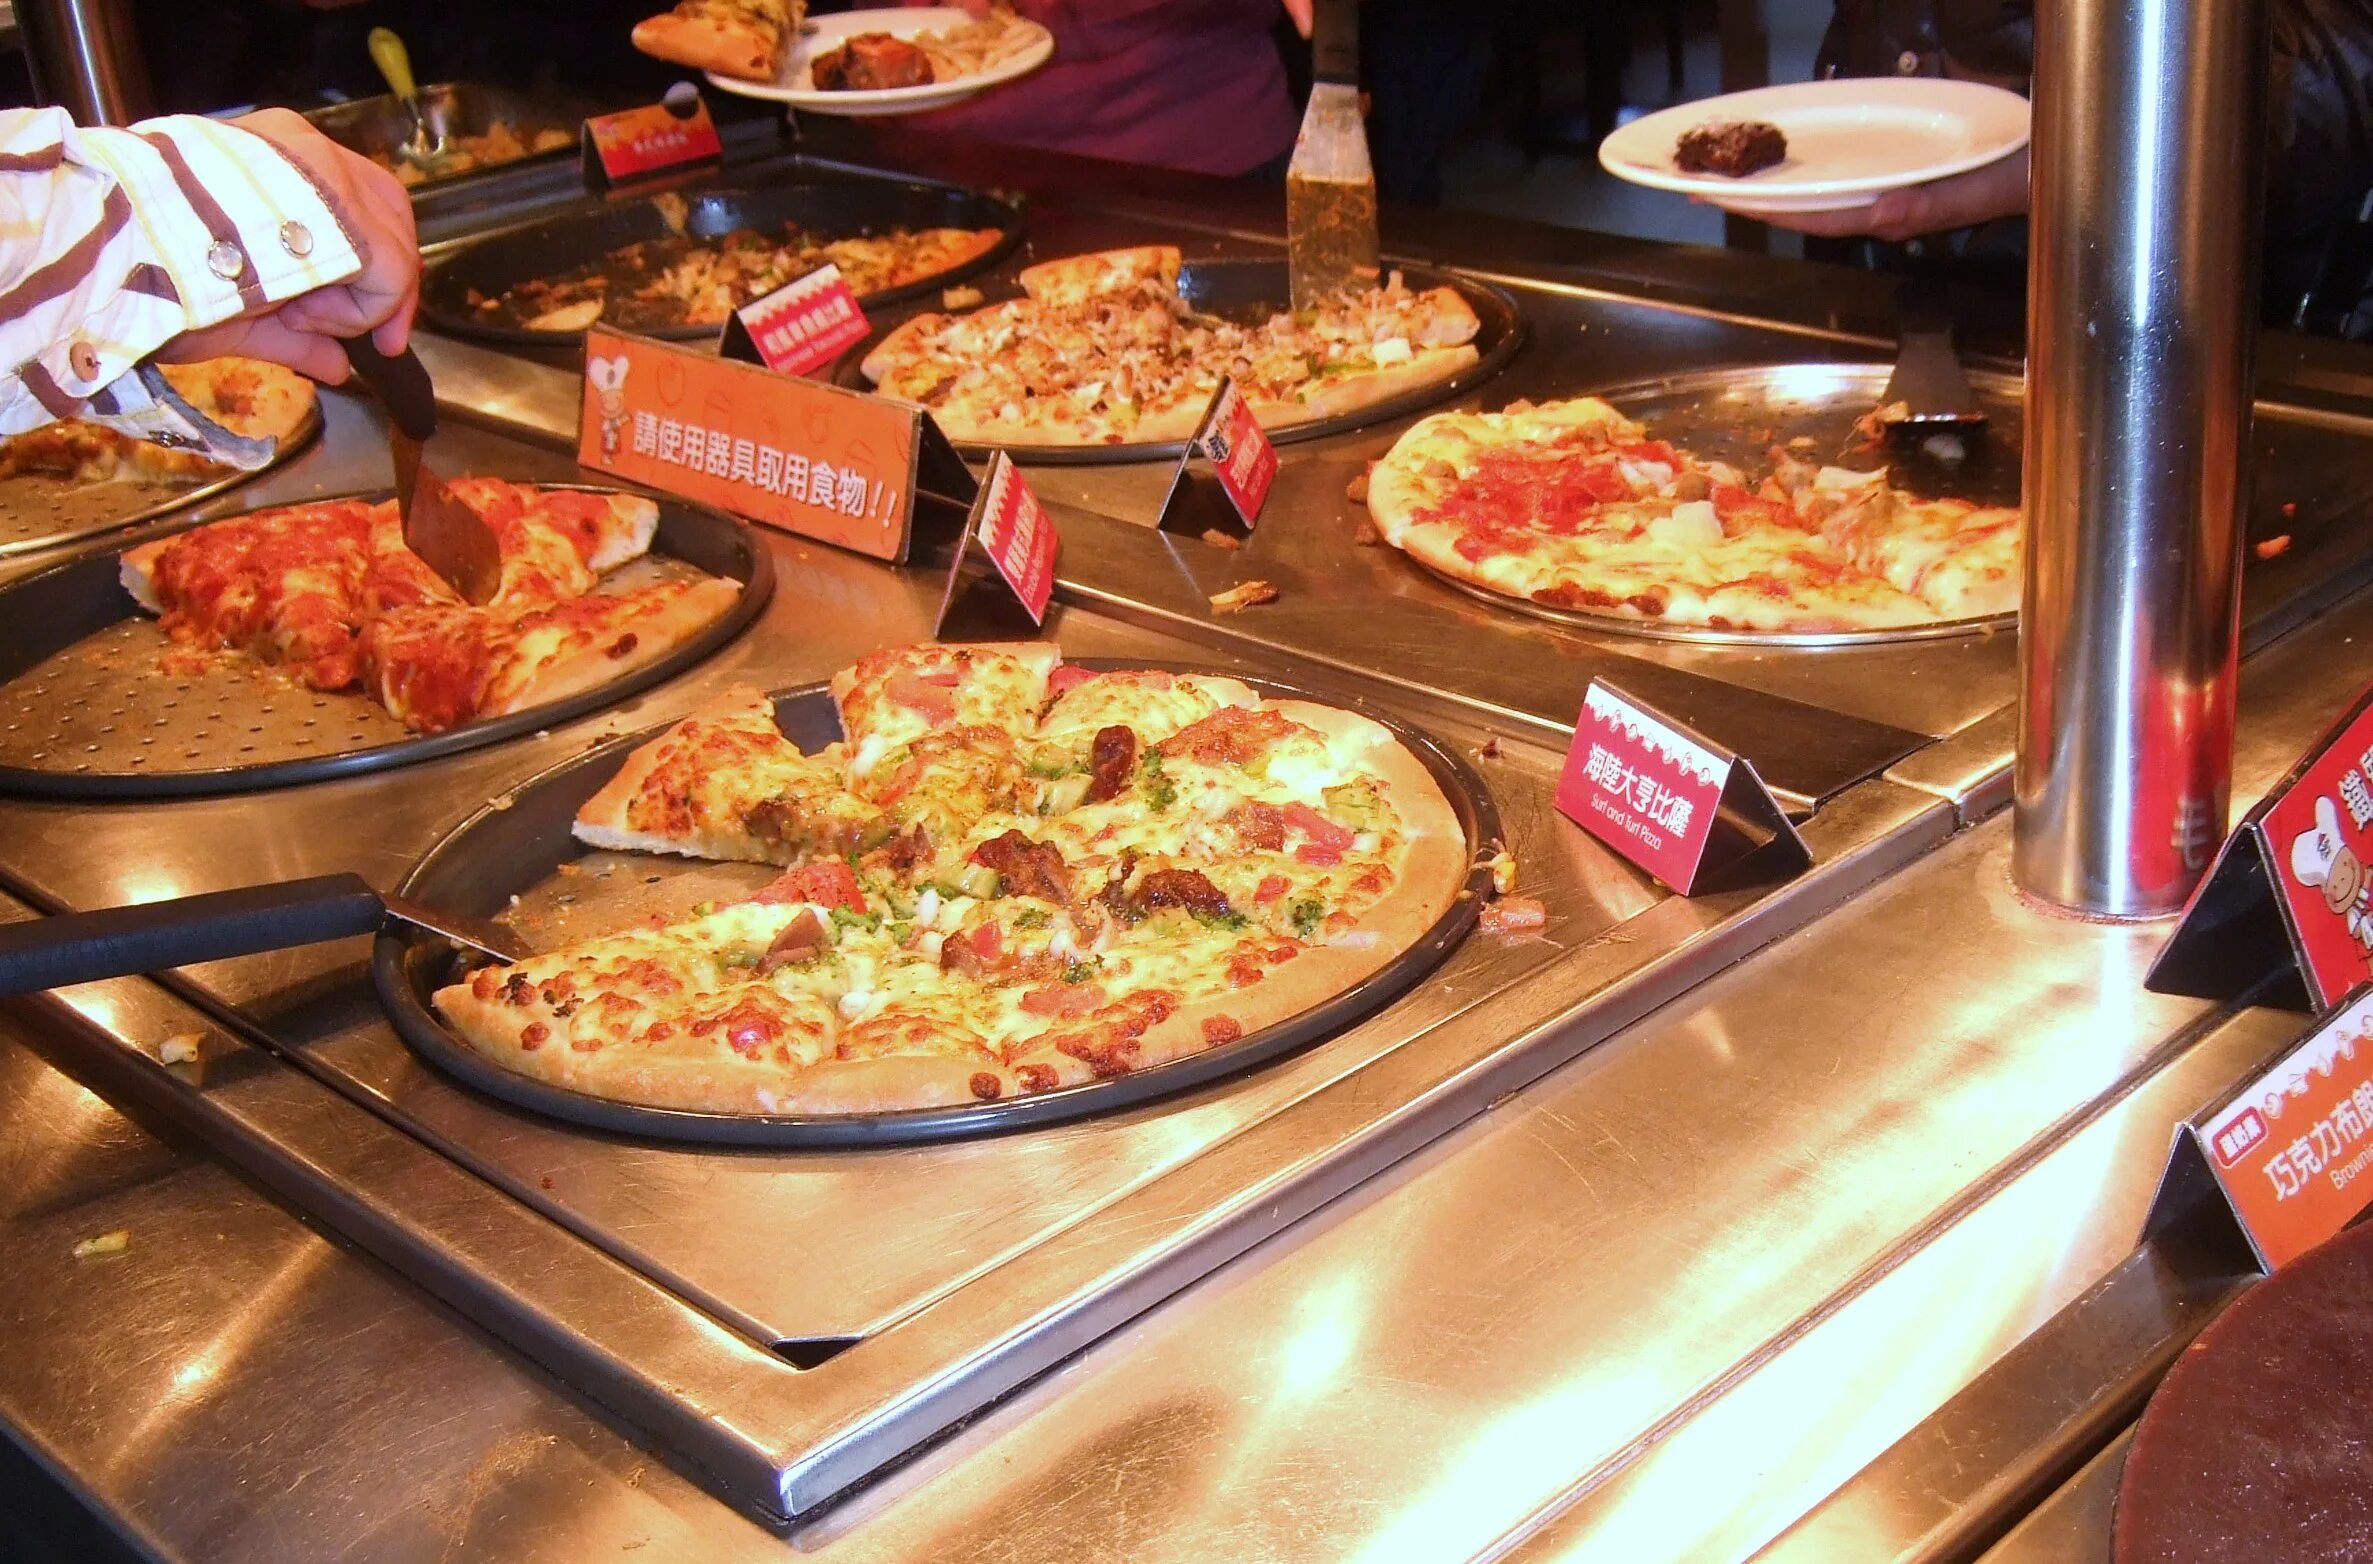 Vivat pizza Ховрино. Pizza Hut Sousse. Pizza Hut интерьер. Ужин с пиццей.